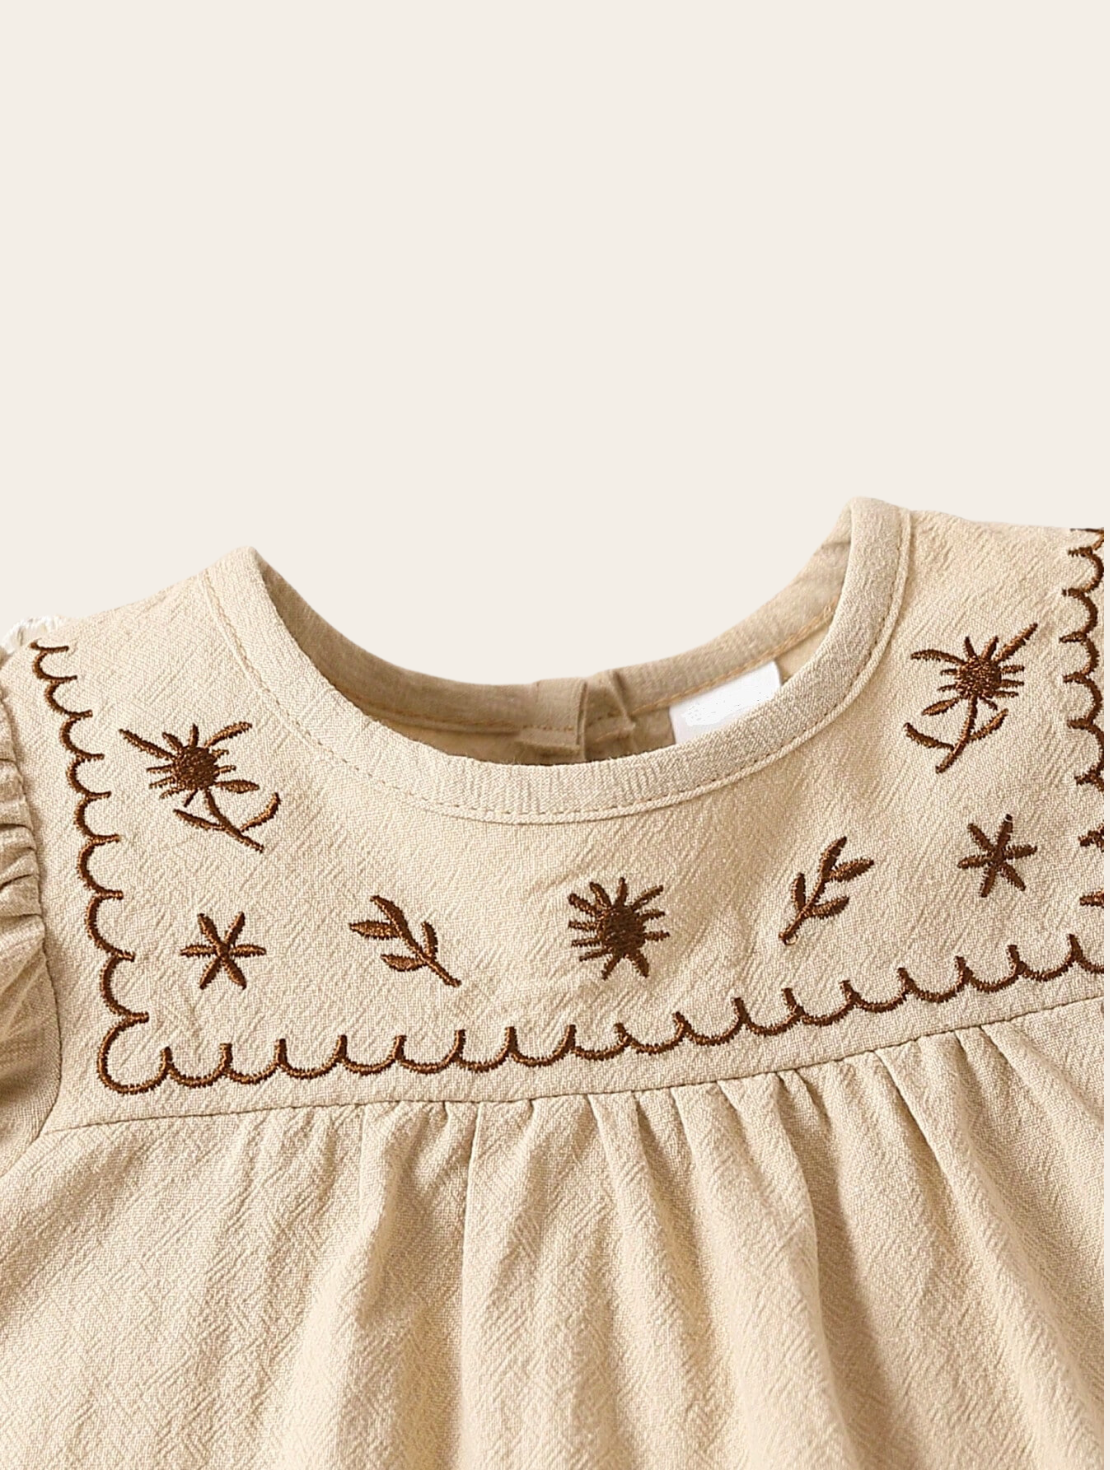 Setje - Beige ruffle embroidery